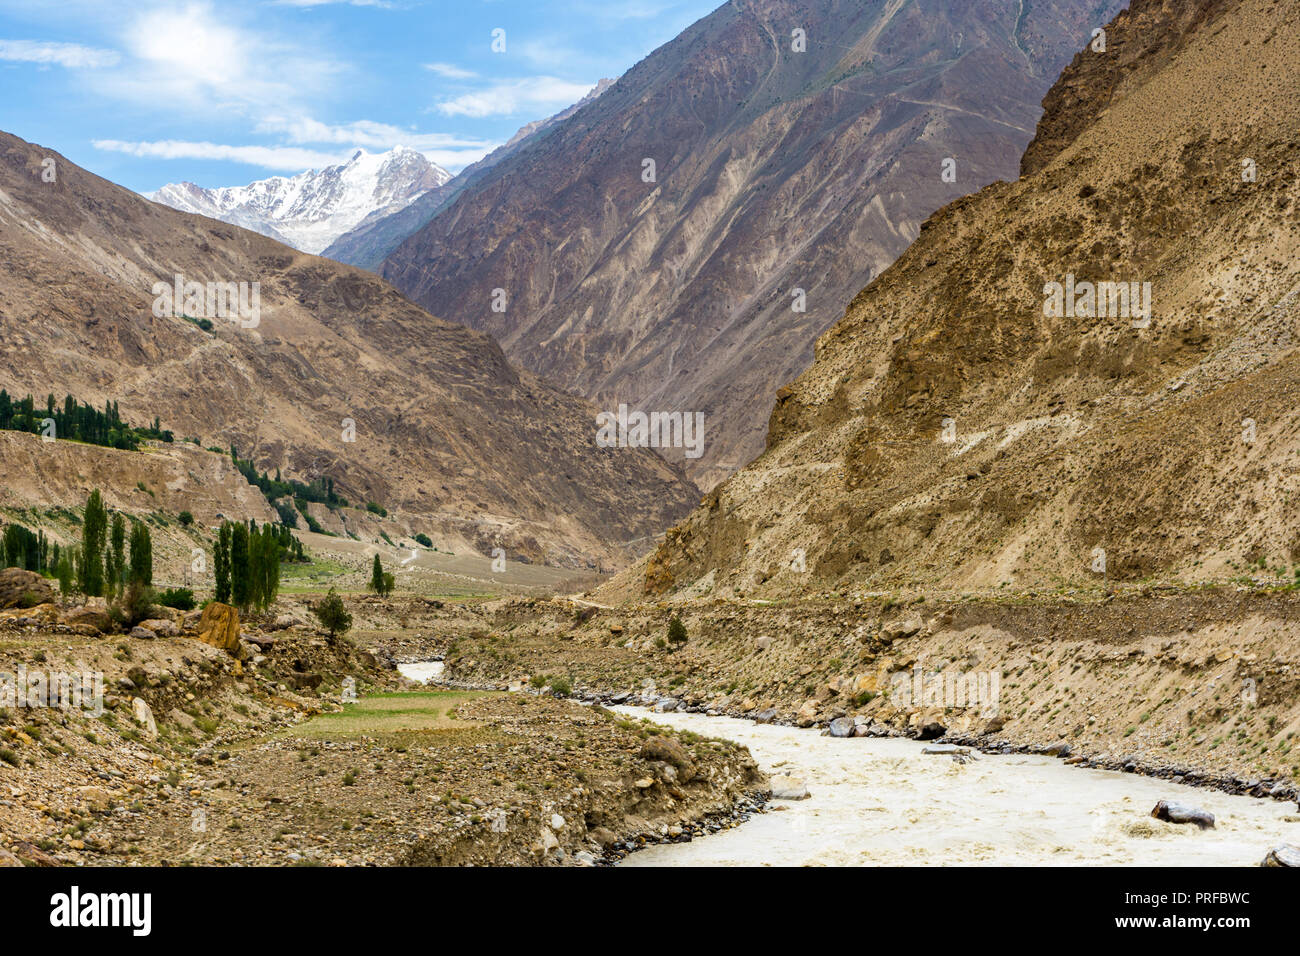 Braldu river flowing between mountains near Skardu, Gilgit-Baltistan, Pakistan Stock Photo